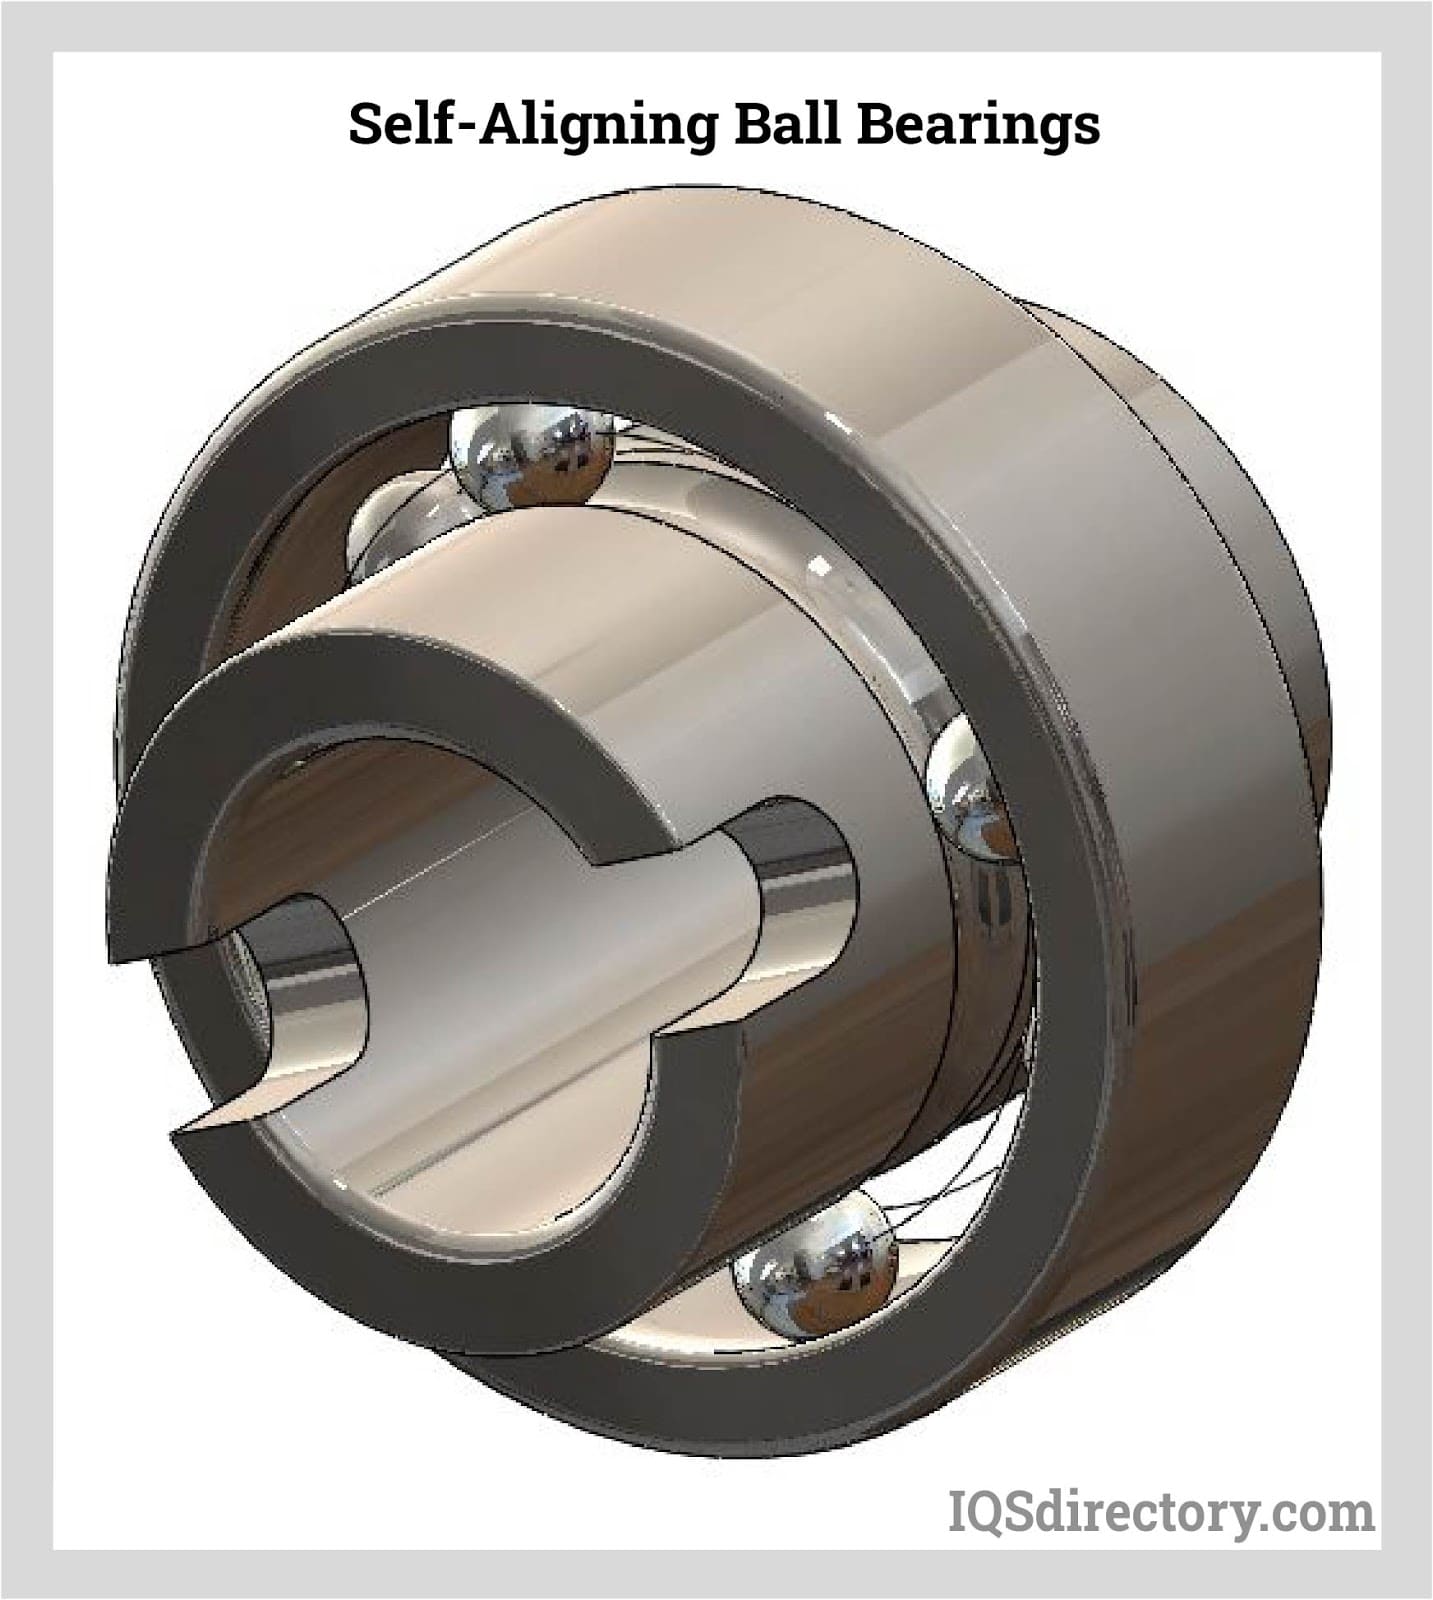 Self-Aligning Ball Bearings